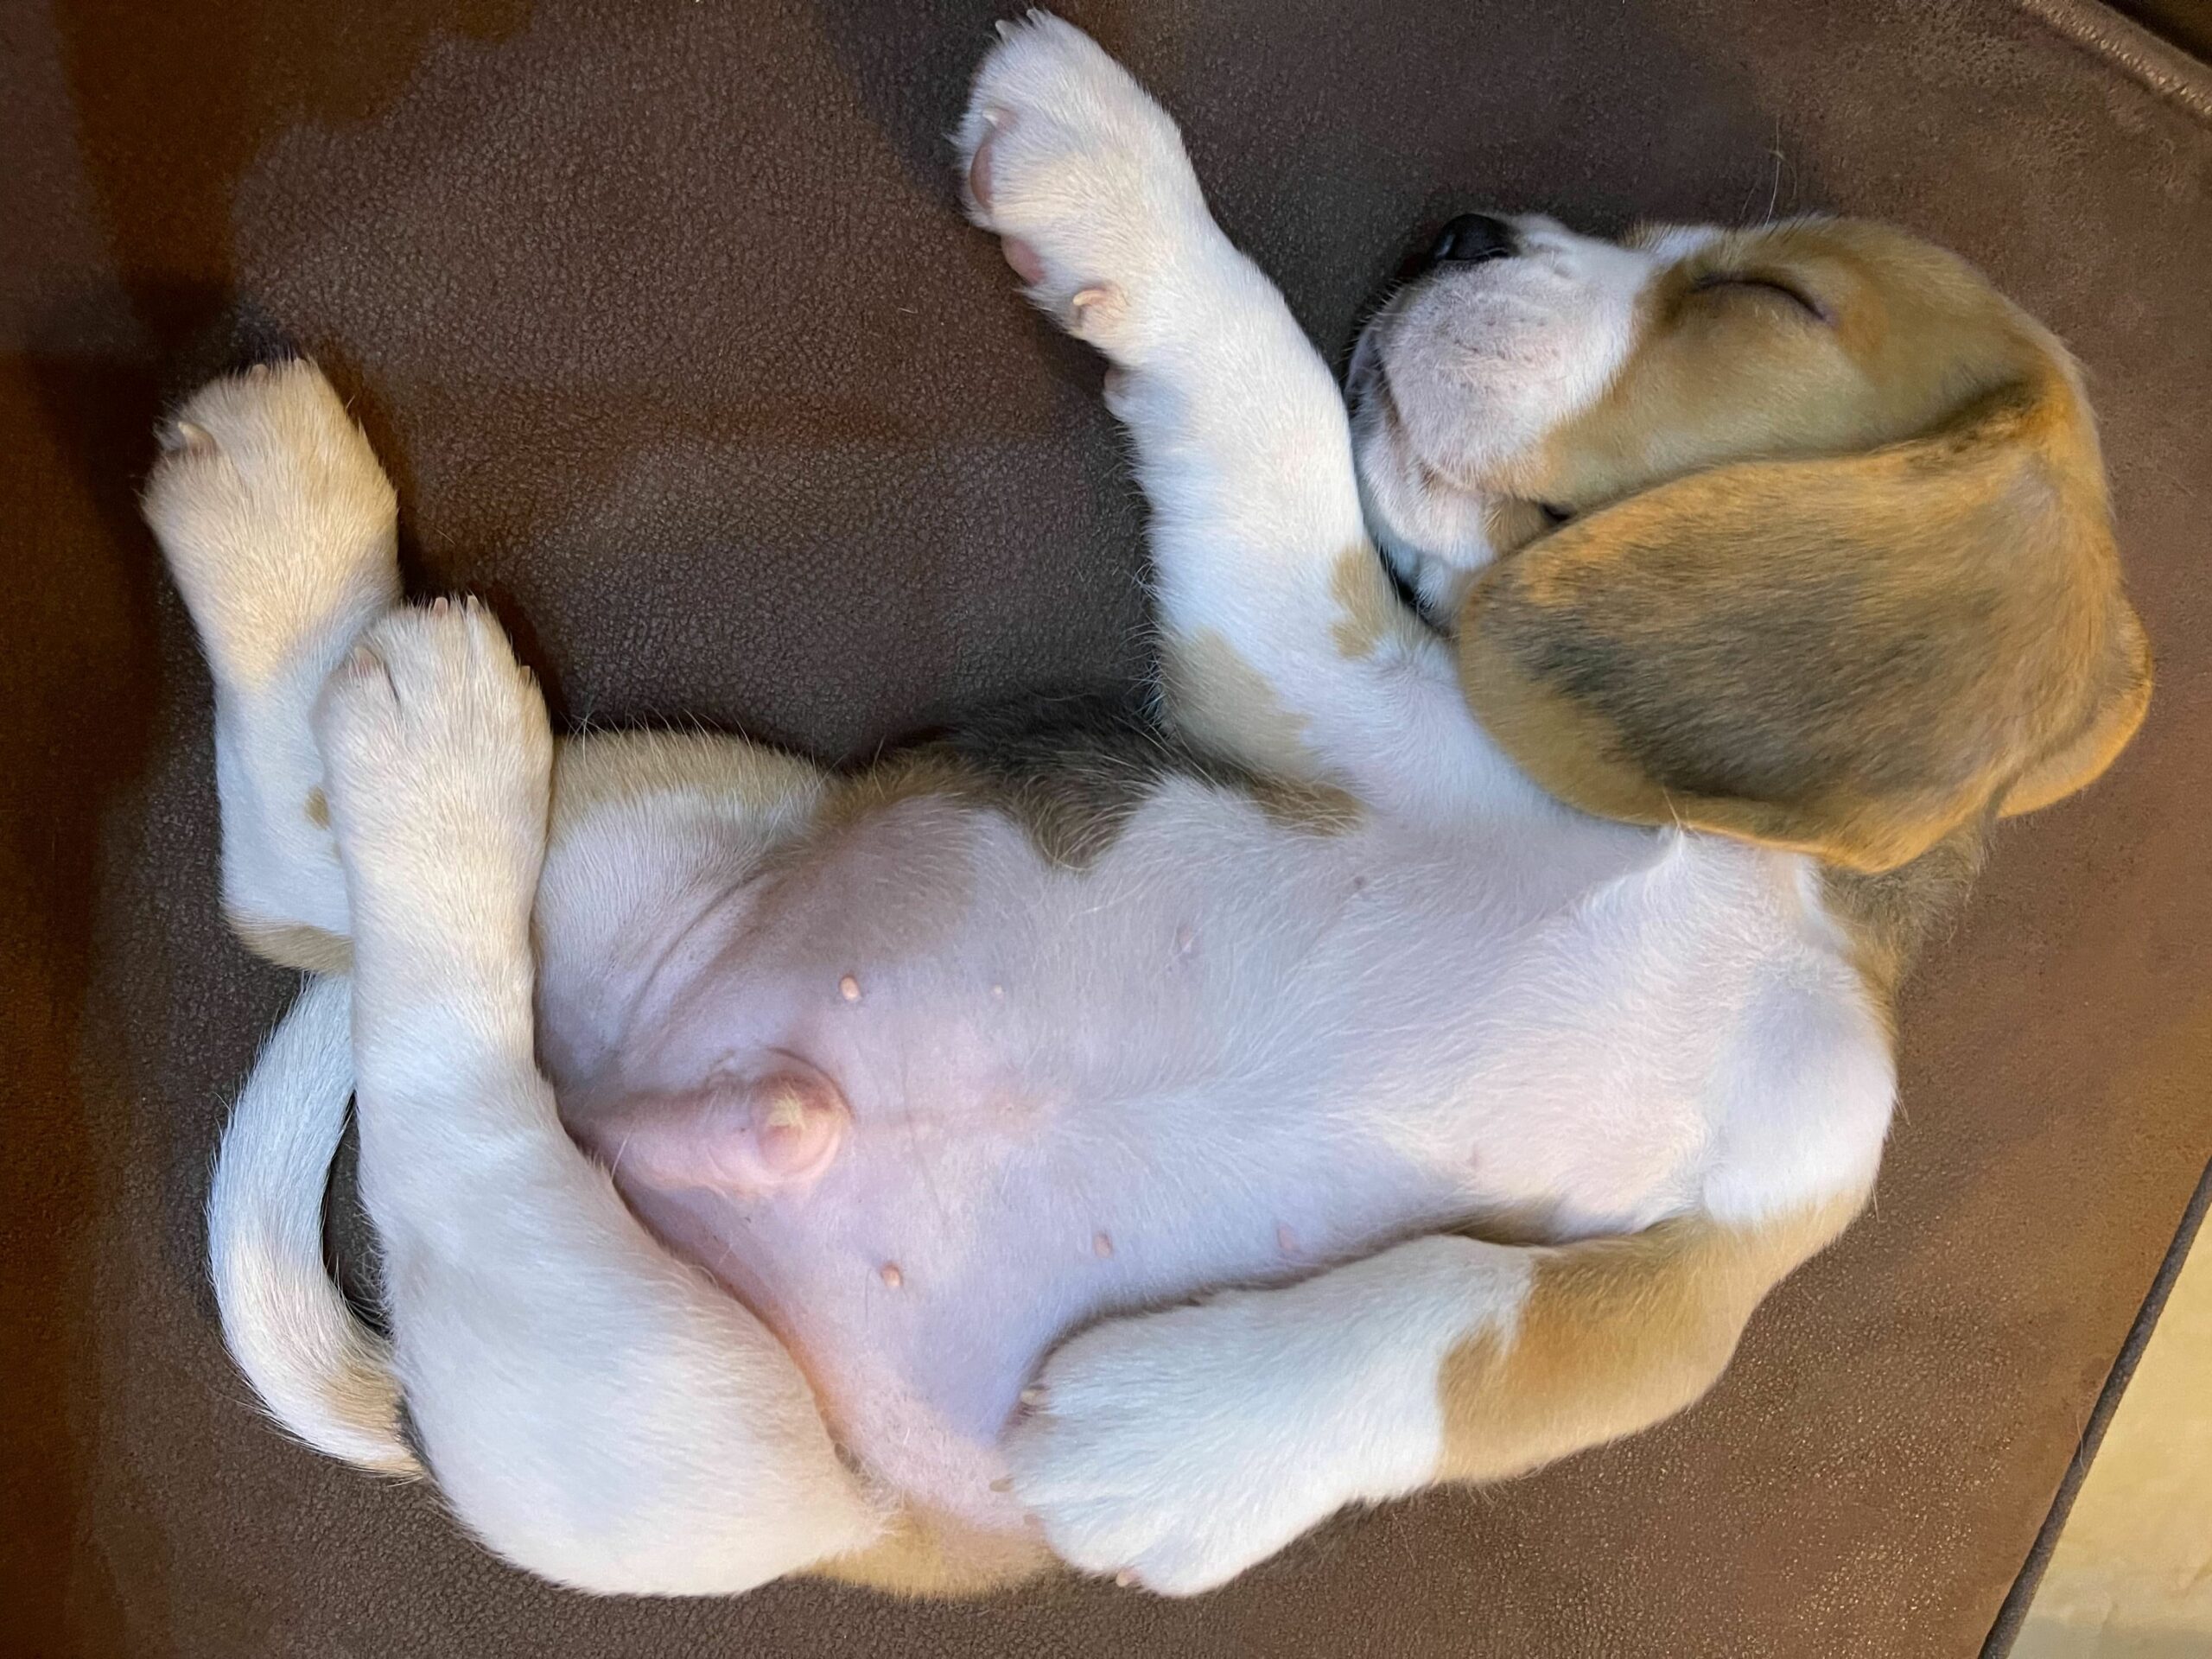 dog sleeping position - on back